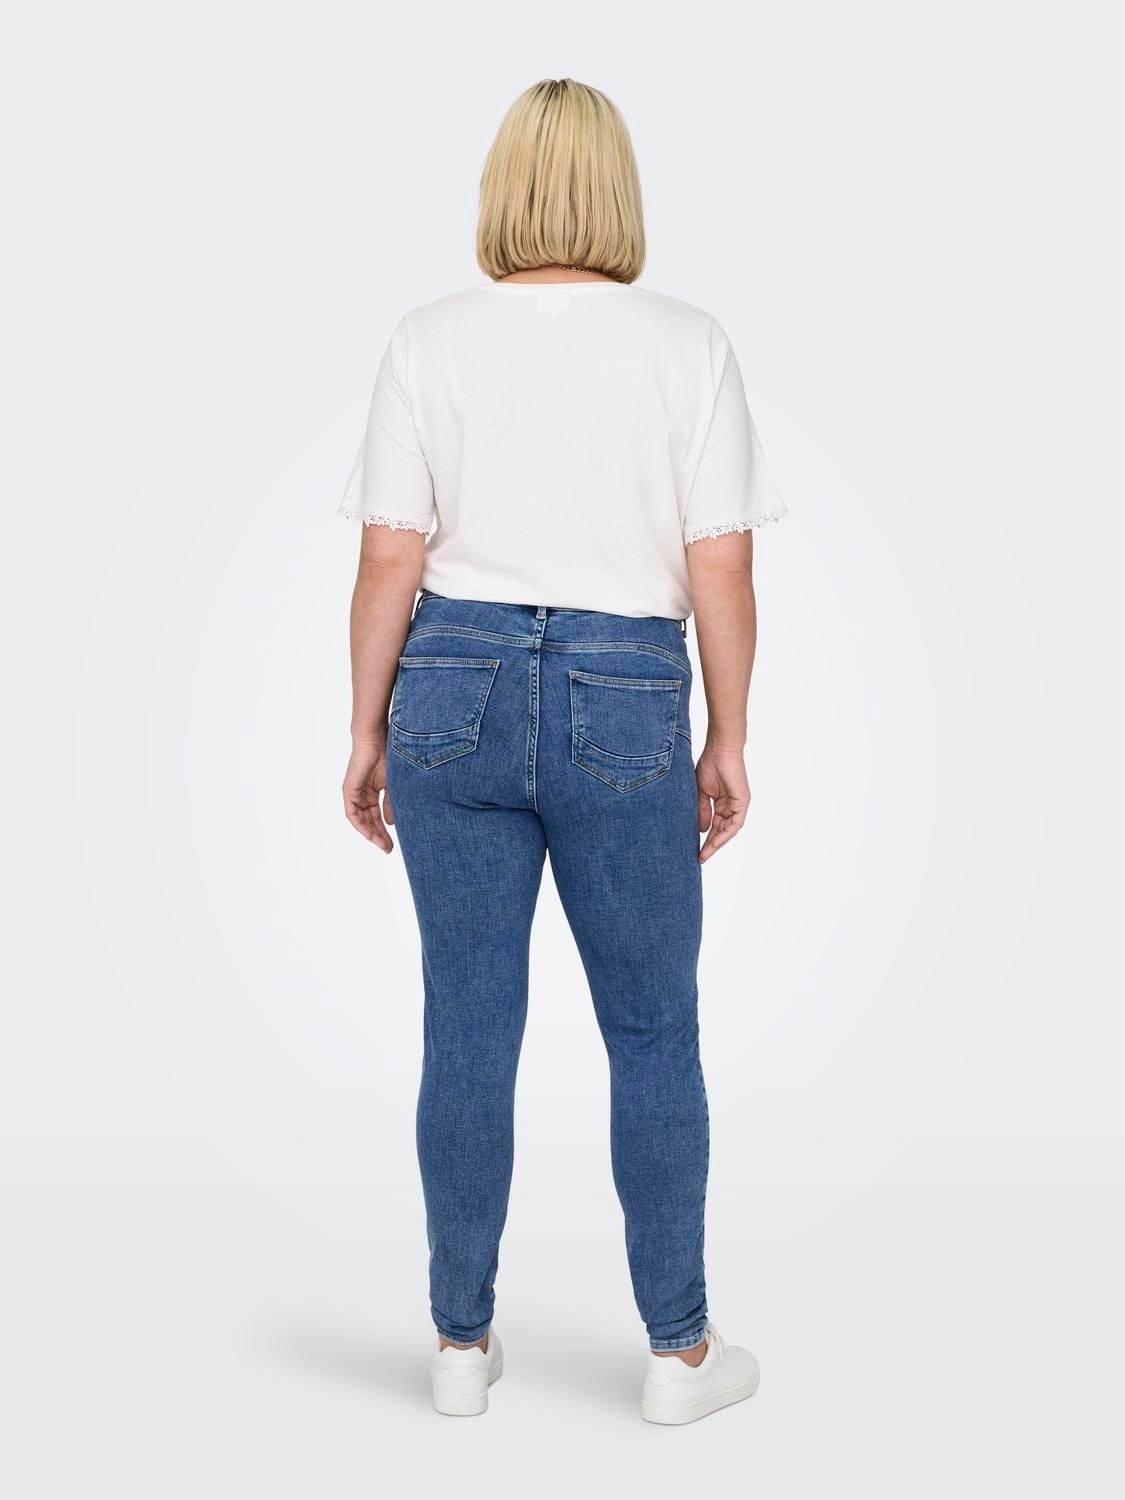 ONLY Skinny Fit Mid waist Jeans -Medium Blue Denim - 15314016